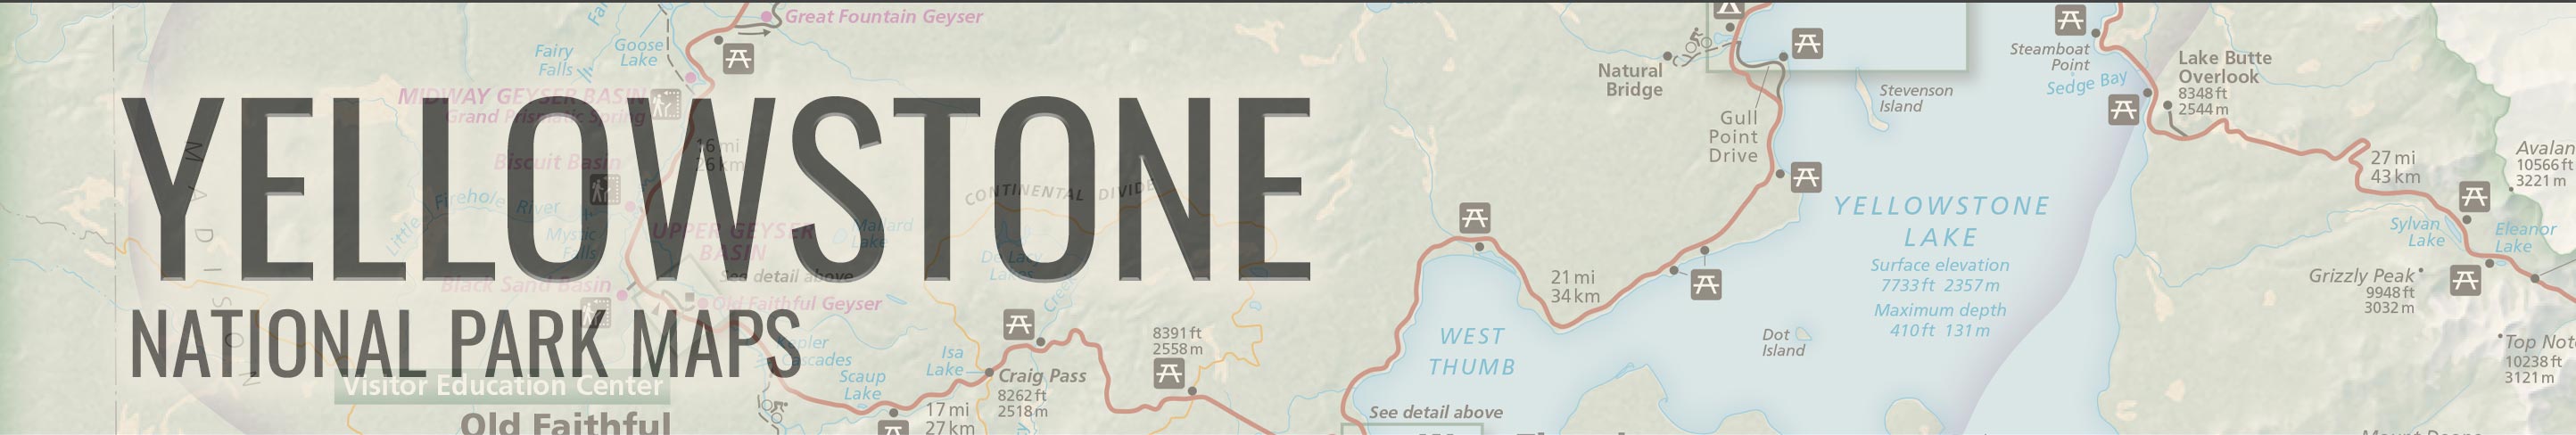 yellowstone-national-park-maps-header